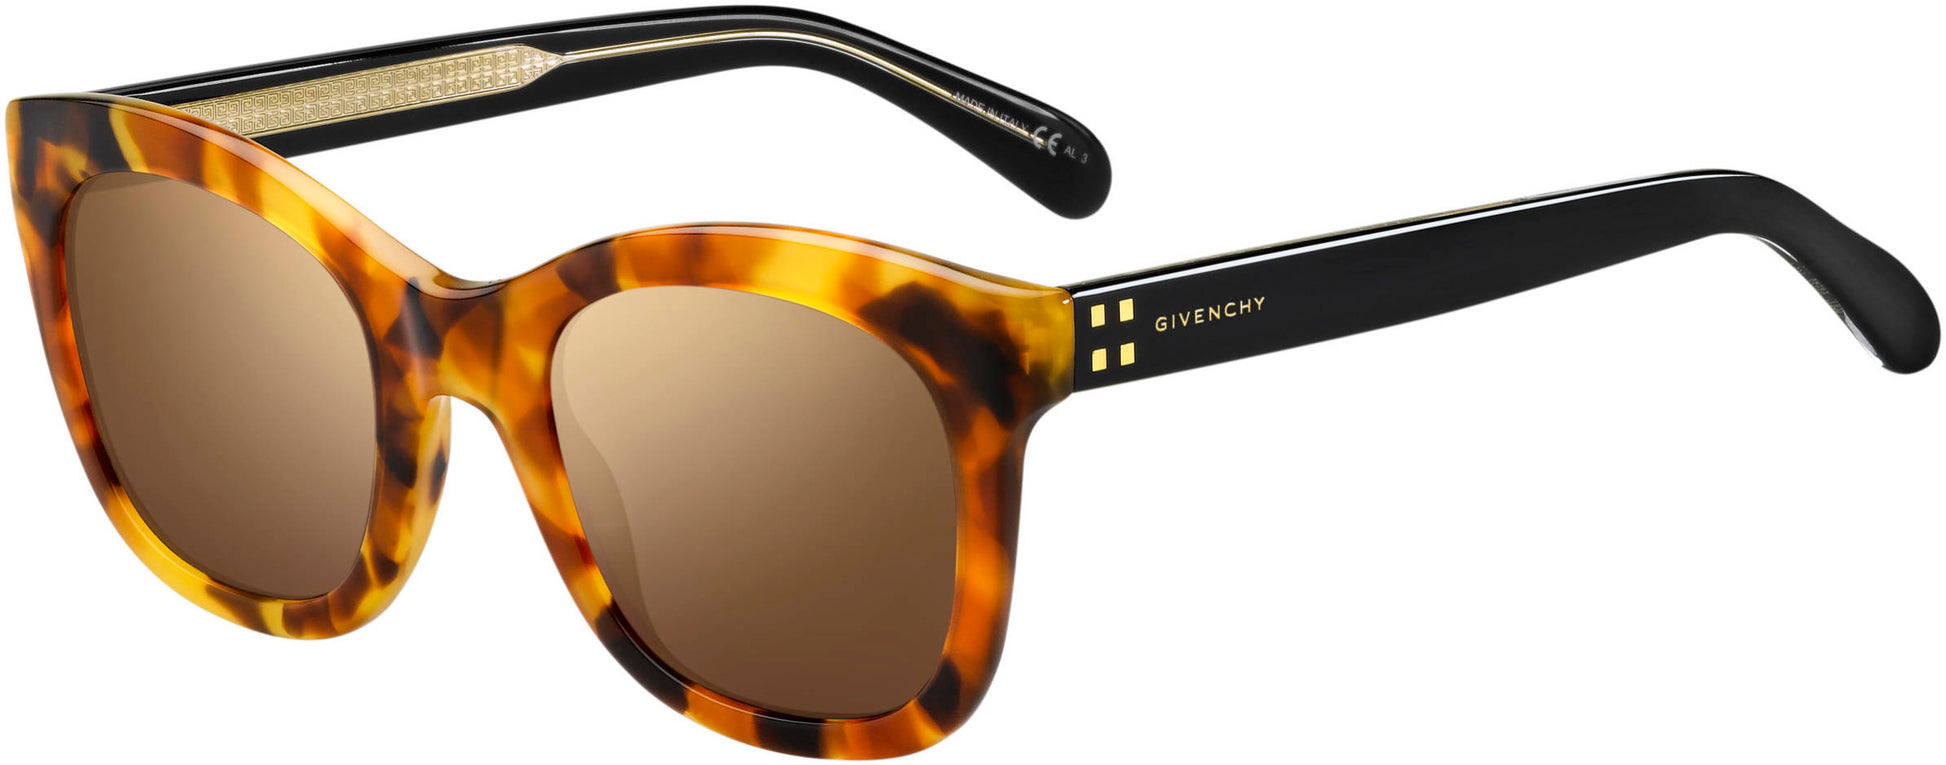 Givenchy GV 7103/S Rectangular Sunglasses 0P65-0P65  Brown Yellow Havana (LC Violet)